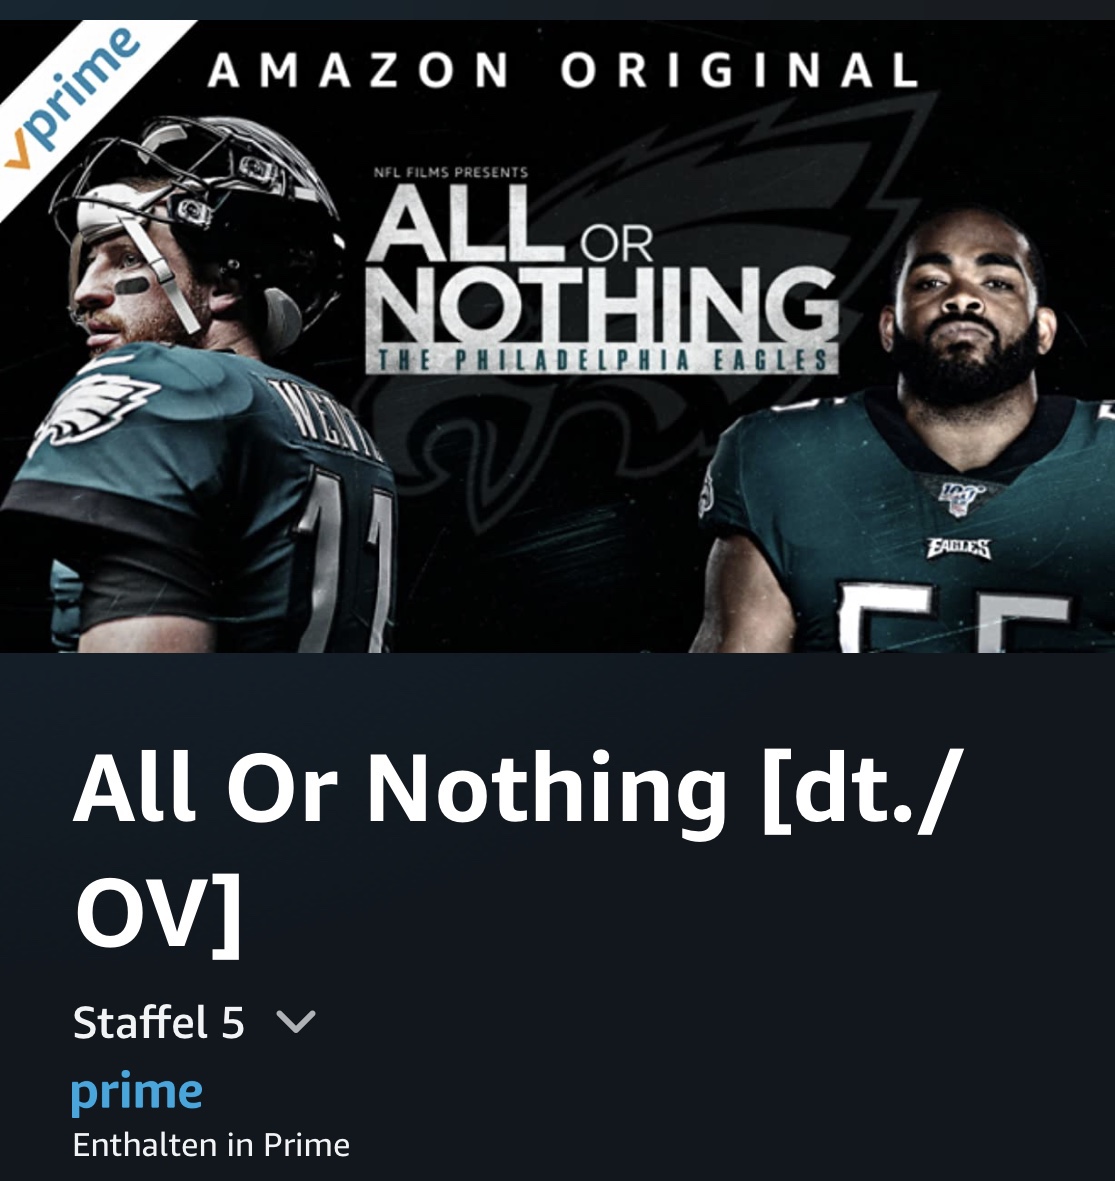 All or nothing - The Philadelphia Eagles - Logo